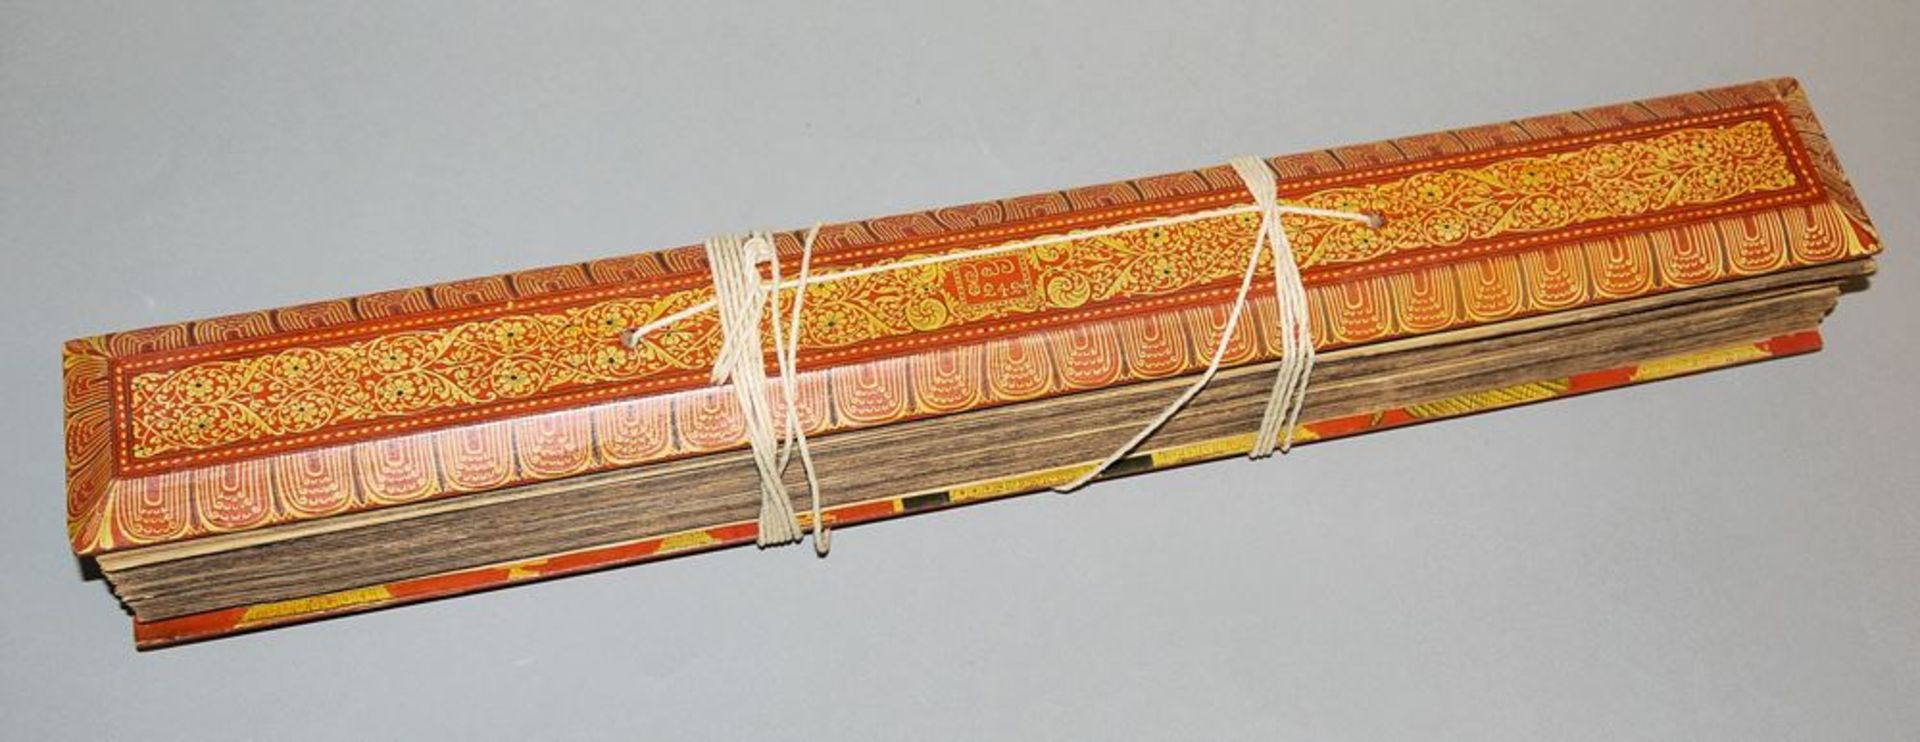 Buddhistisches Palmblatt-Manuskript, Sri Lanka, wohl Ende 19. Jh. - Bild 2 aus 3